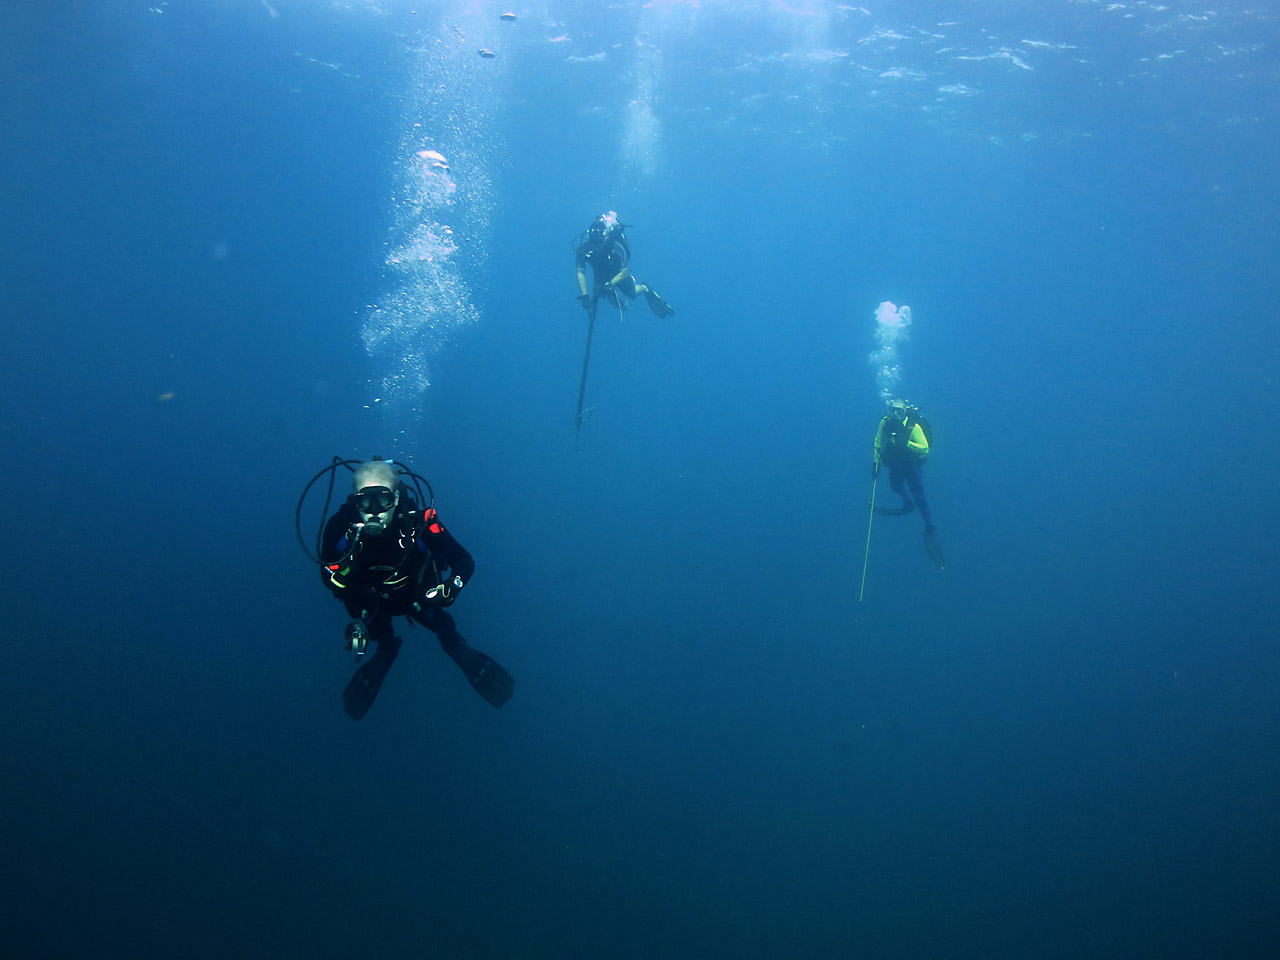 Model warns deep-sea divers on severity of decompression sickness